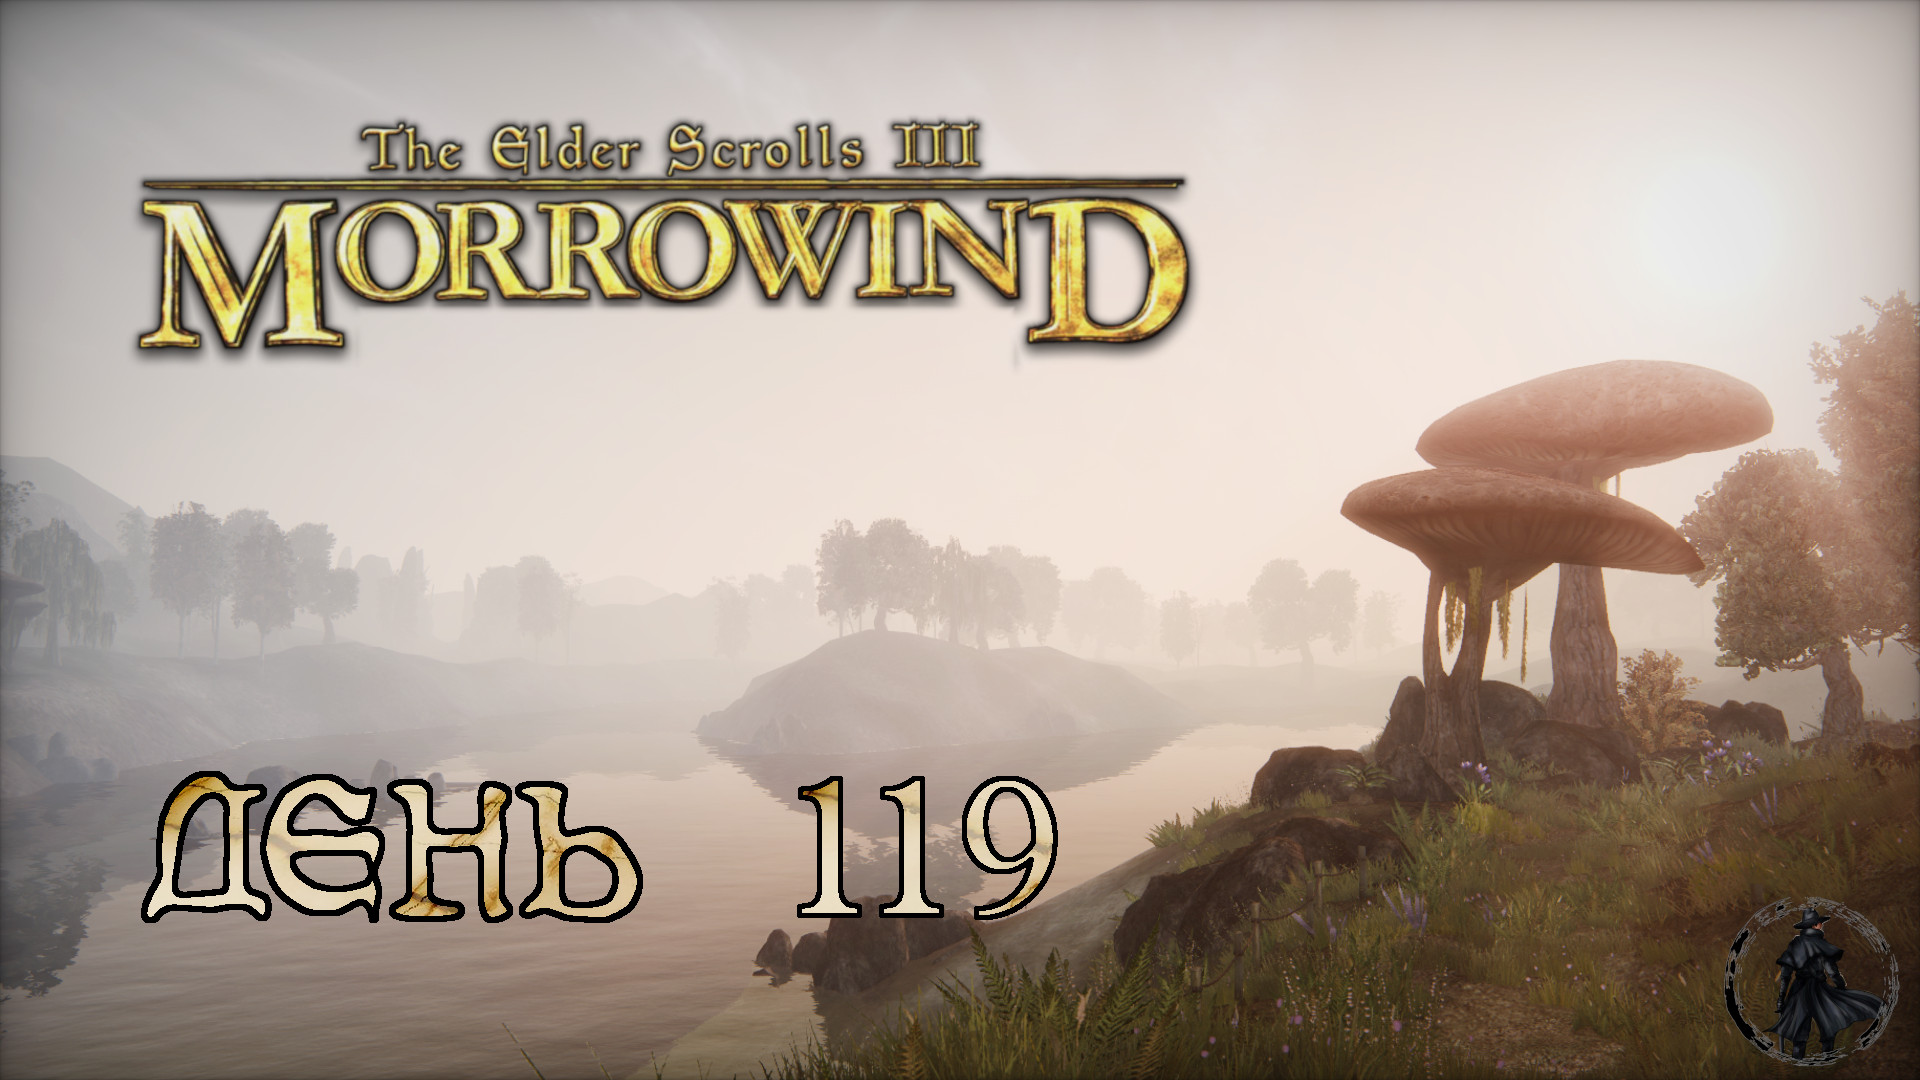 Прохождение бесед. Морровинд. The Elder Scrolls III. The Elder Scrolls III: Morrowind. Амулеты морровинд.